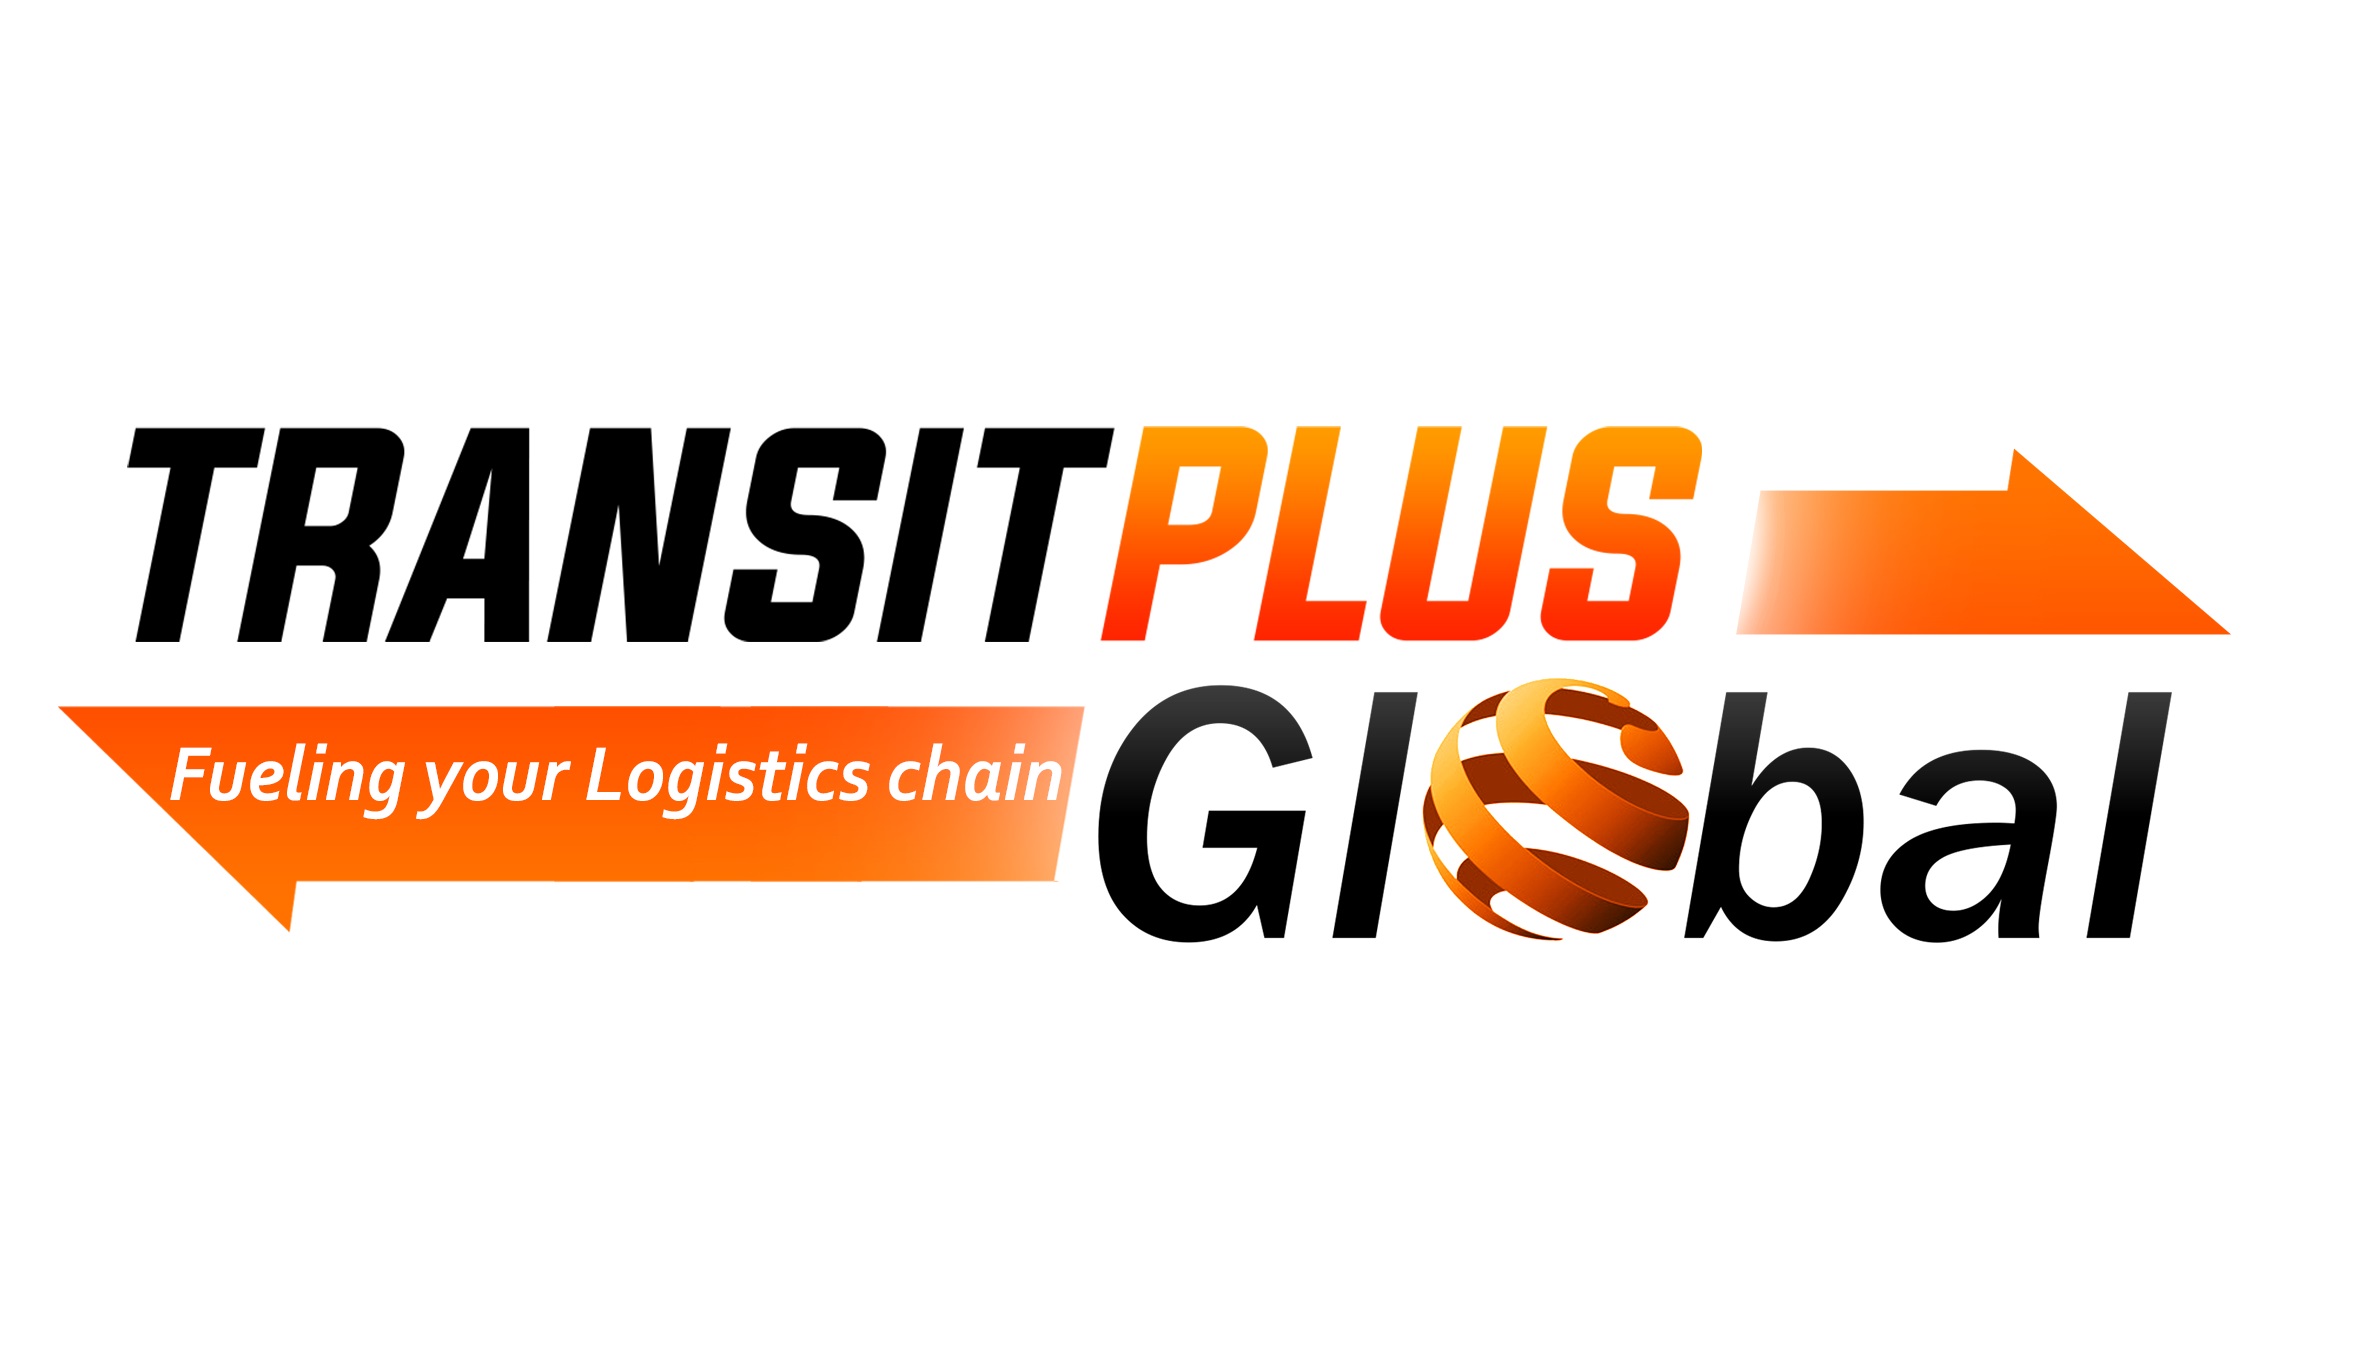 Transitplus Global